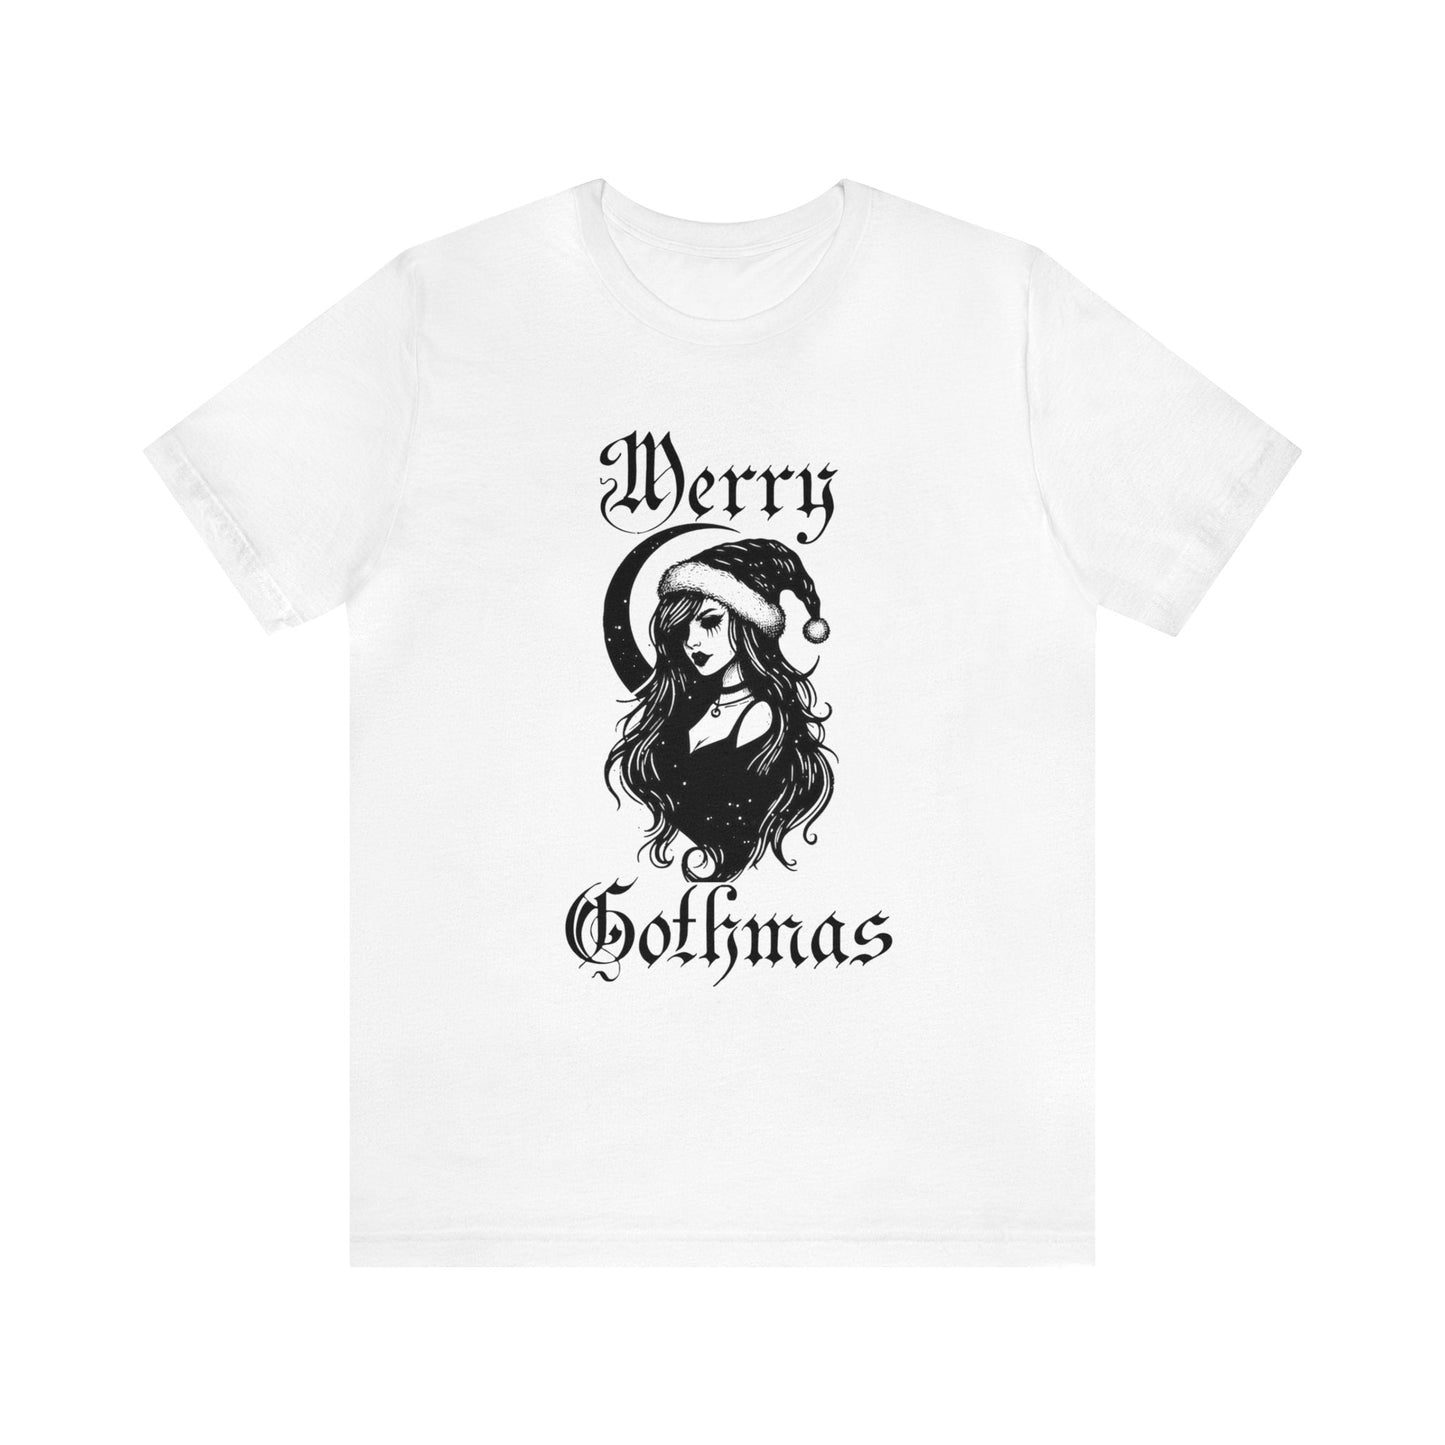 Merry Gothmas Short Sleeve Tee ShirtT - ShirtVTZdesignsWhiteXSchristmasclothingCotton